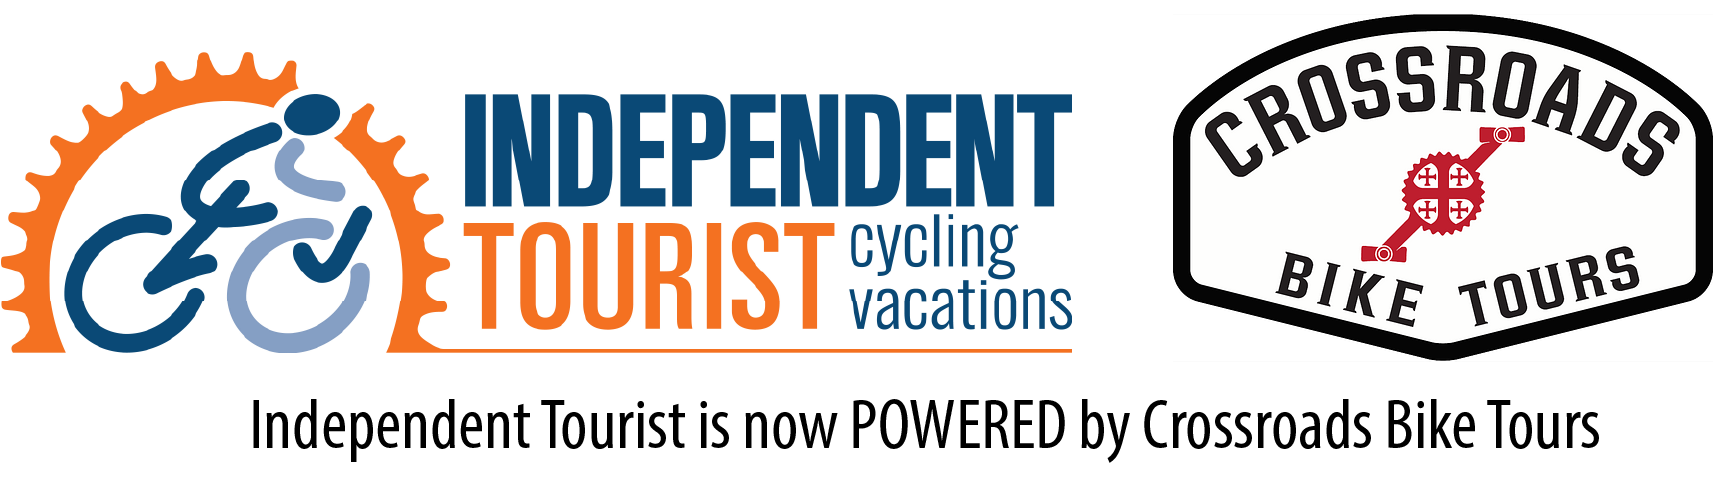 Crossroads bike tours cycling vacation and self guided bike tour